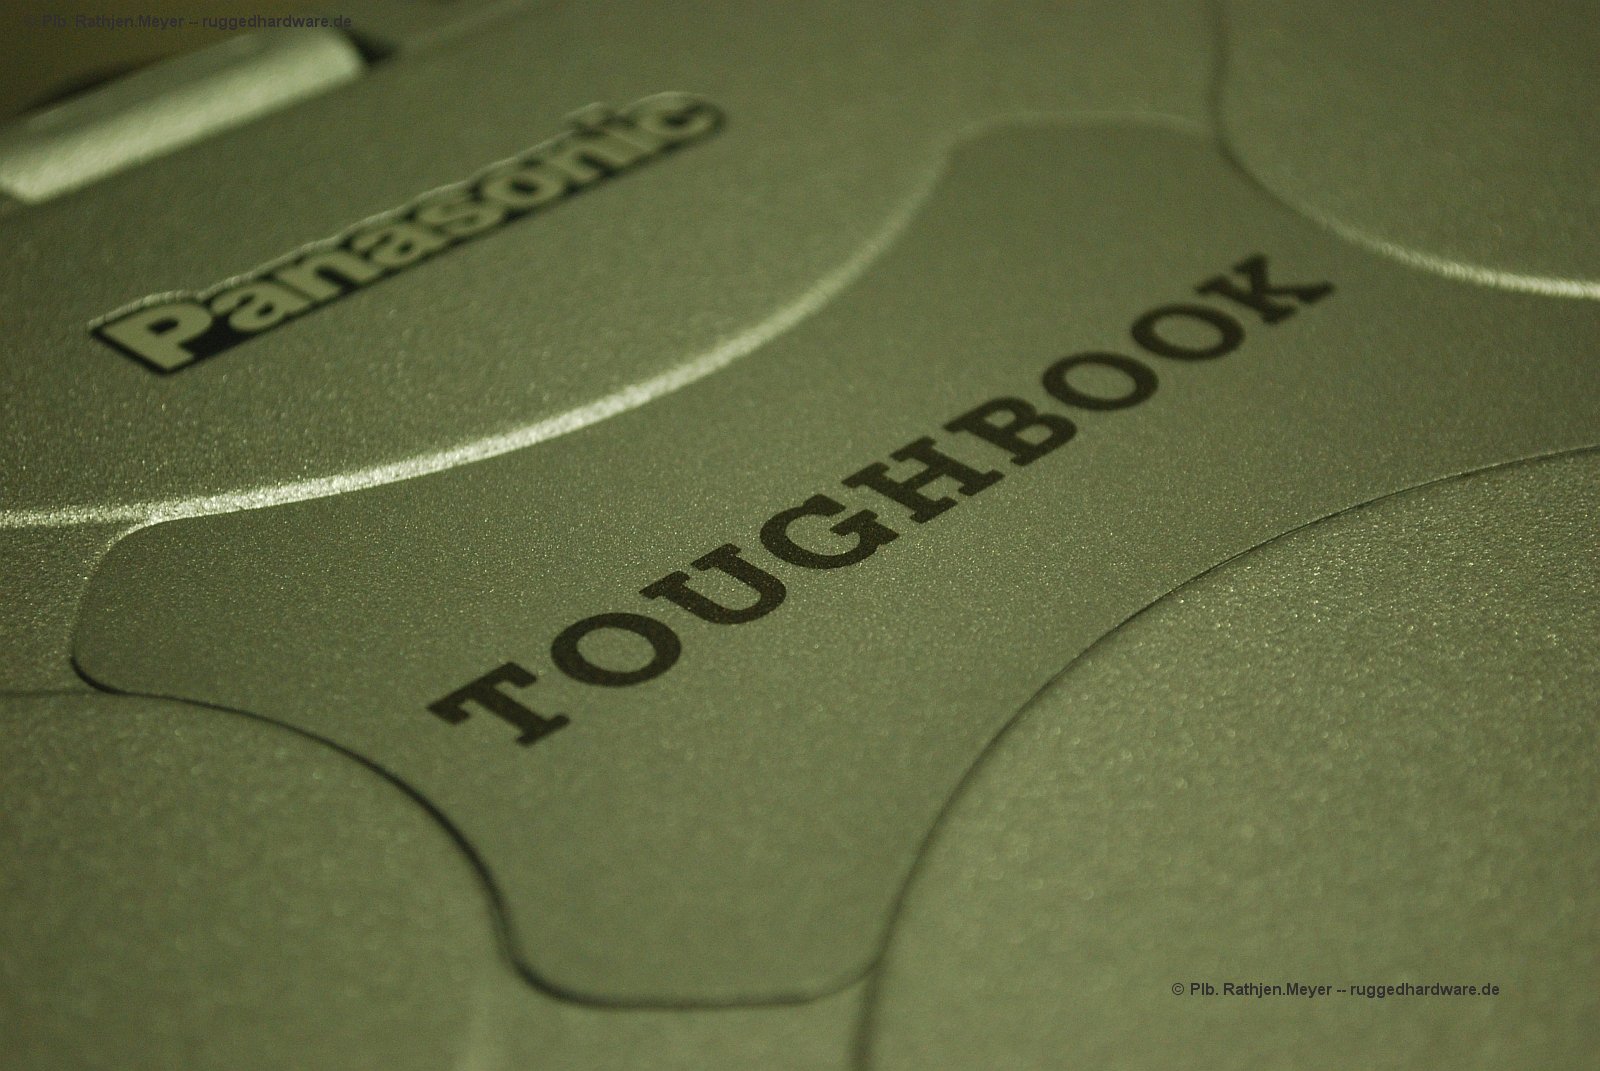 Panasonic Toughbook Wallpapers